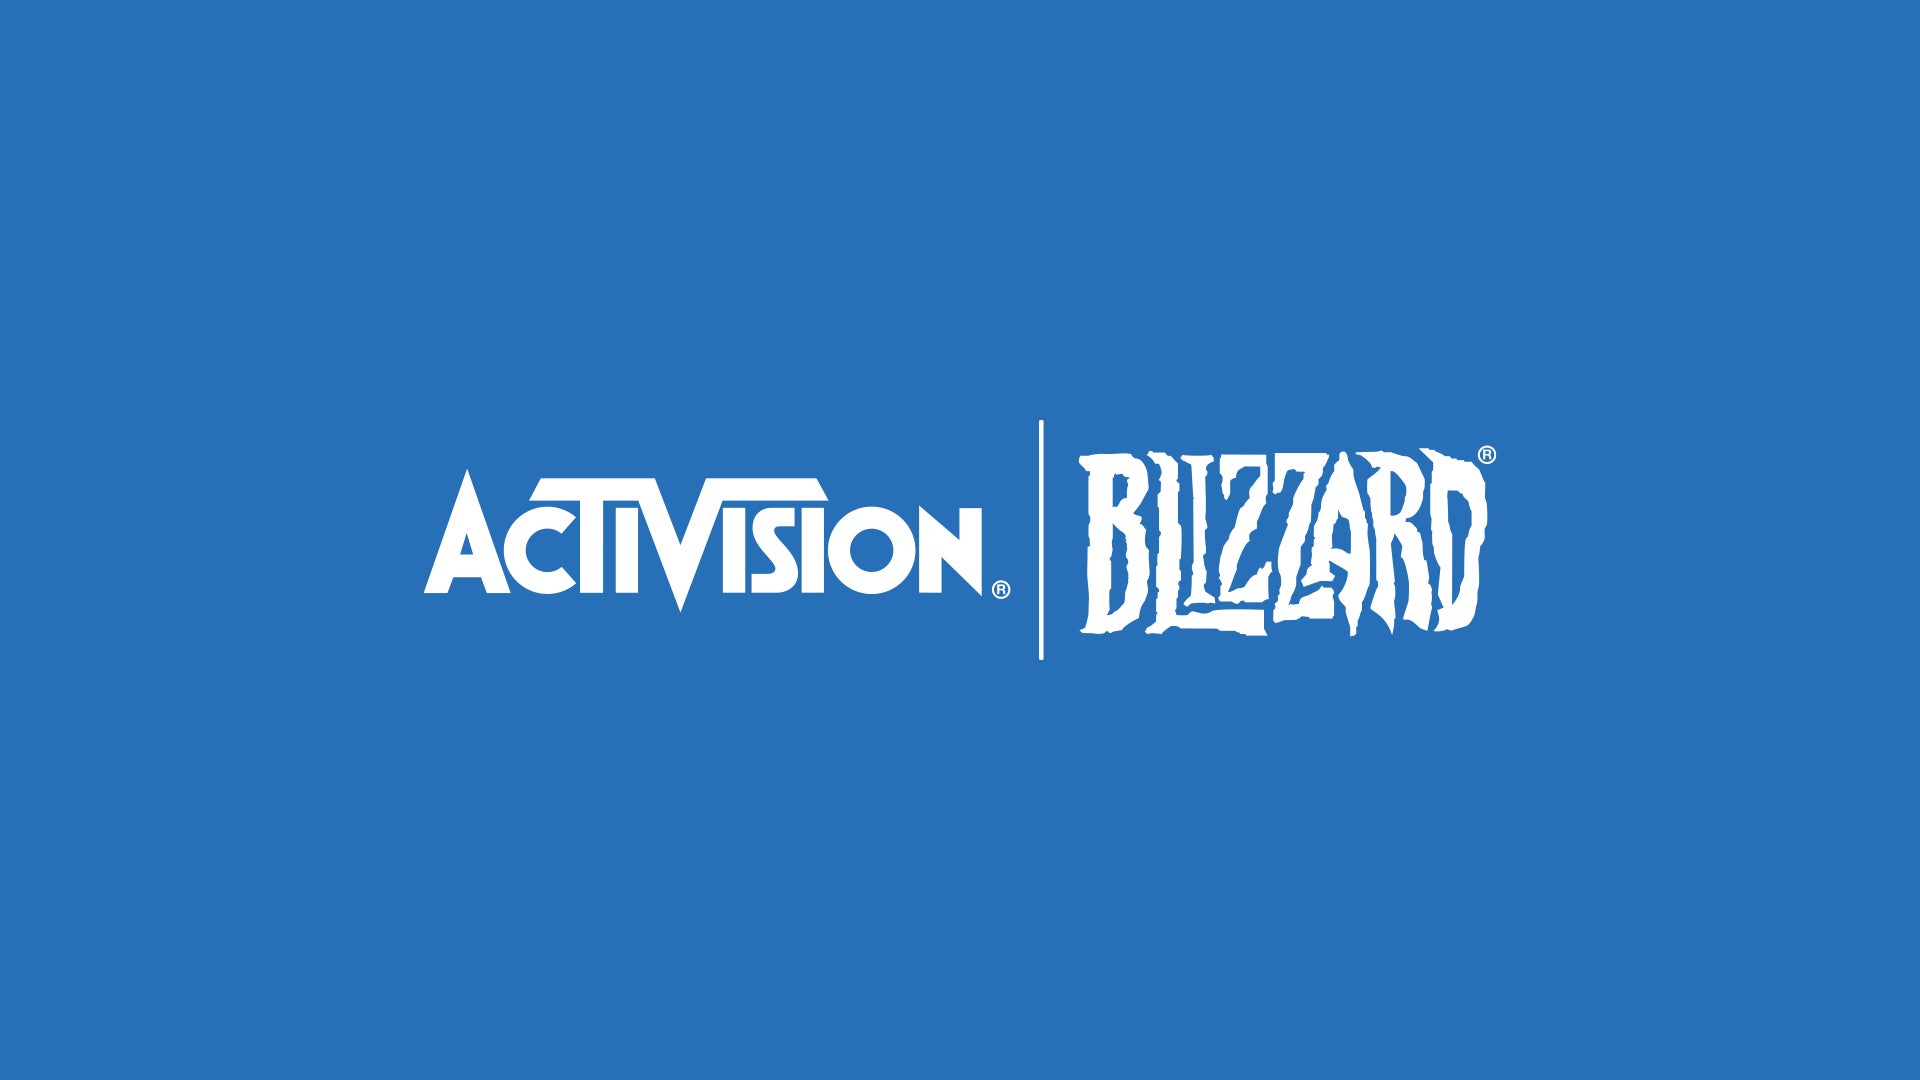 activision_blizzard_logos_blue_bg_1.jpg